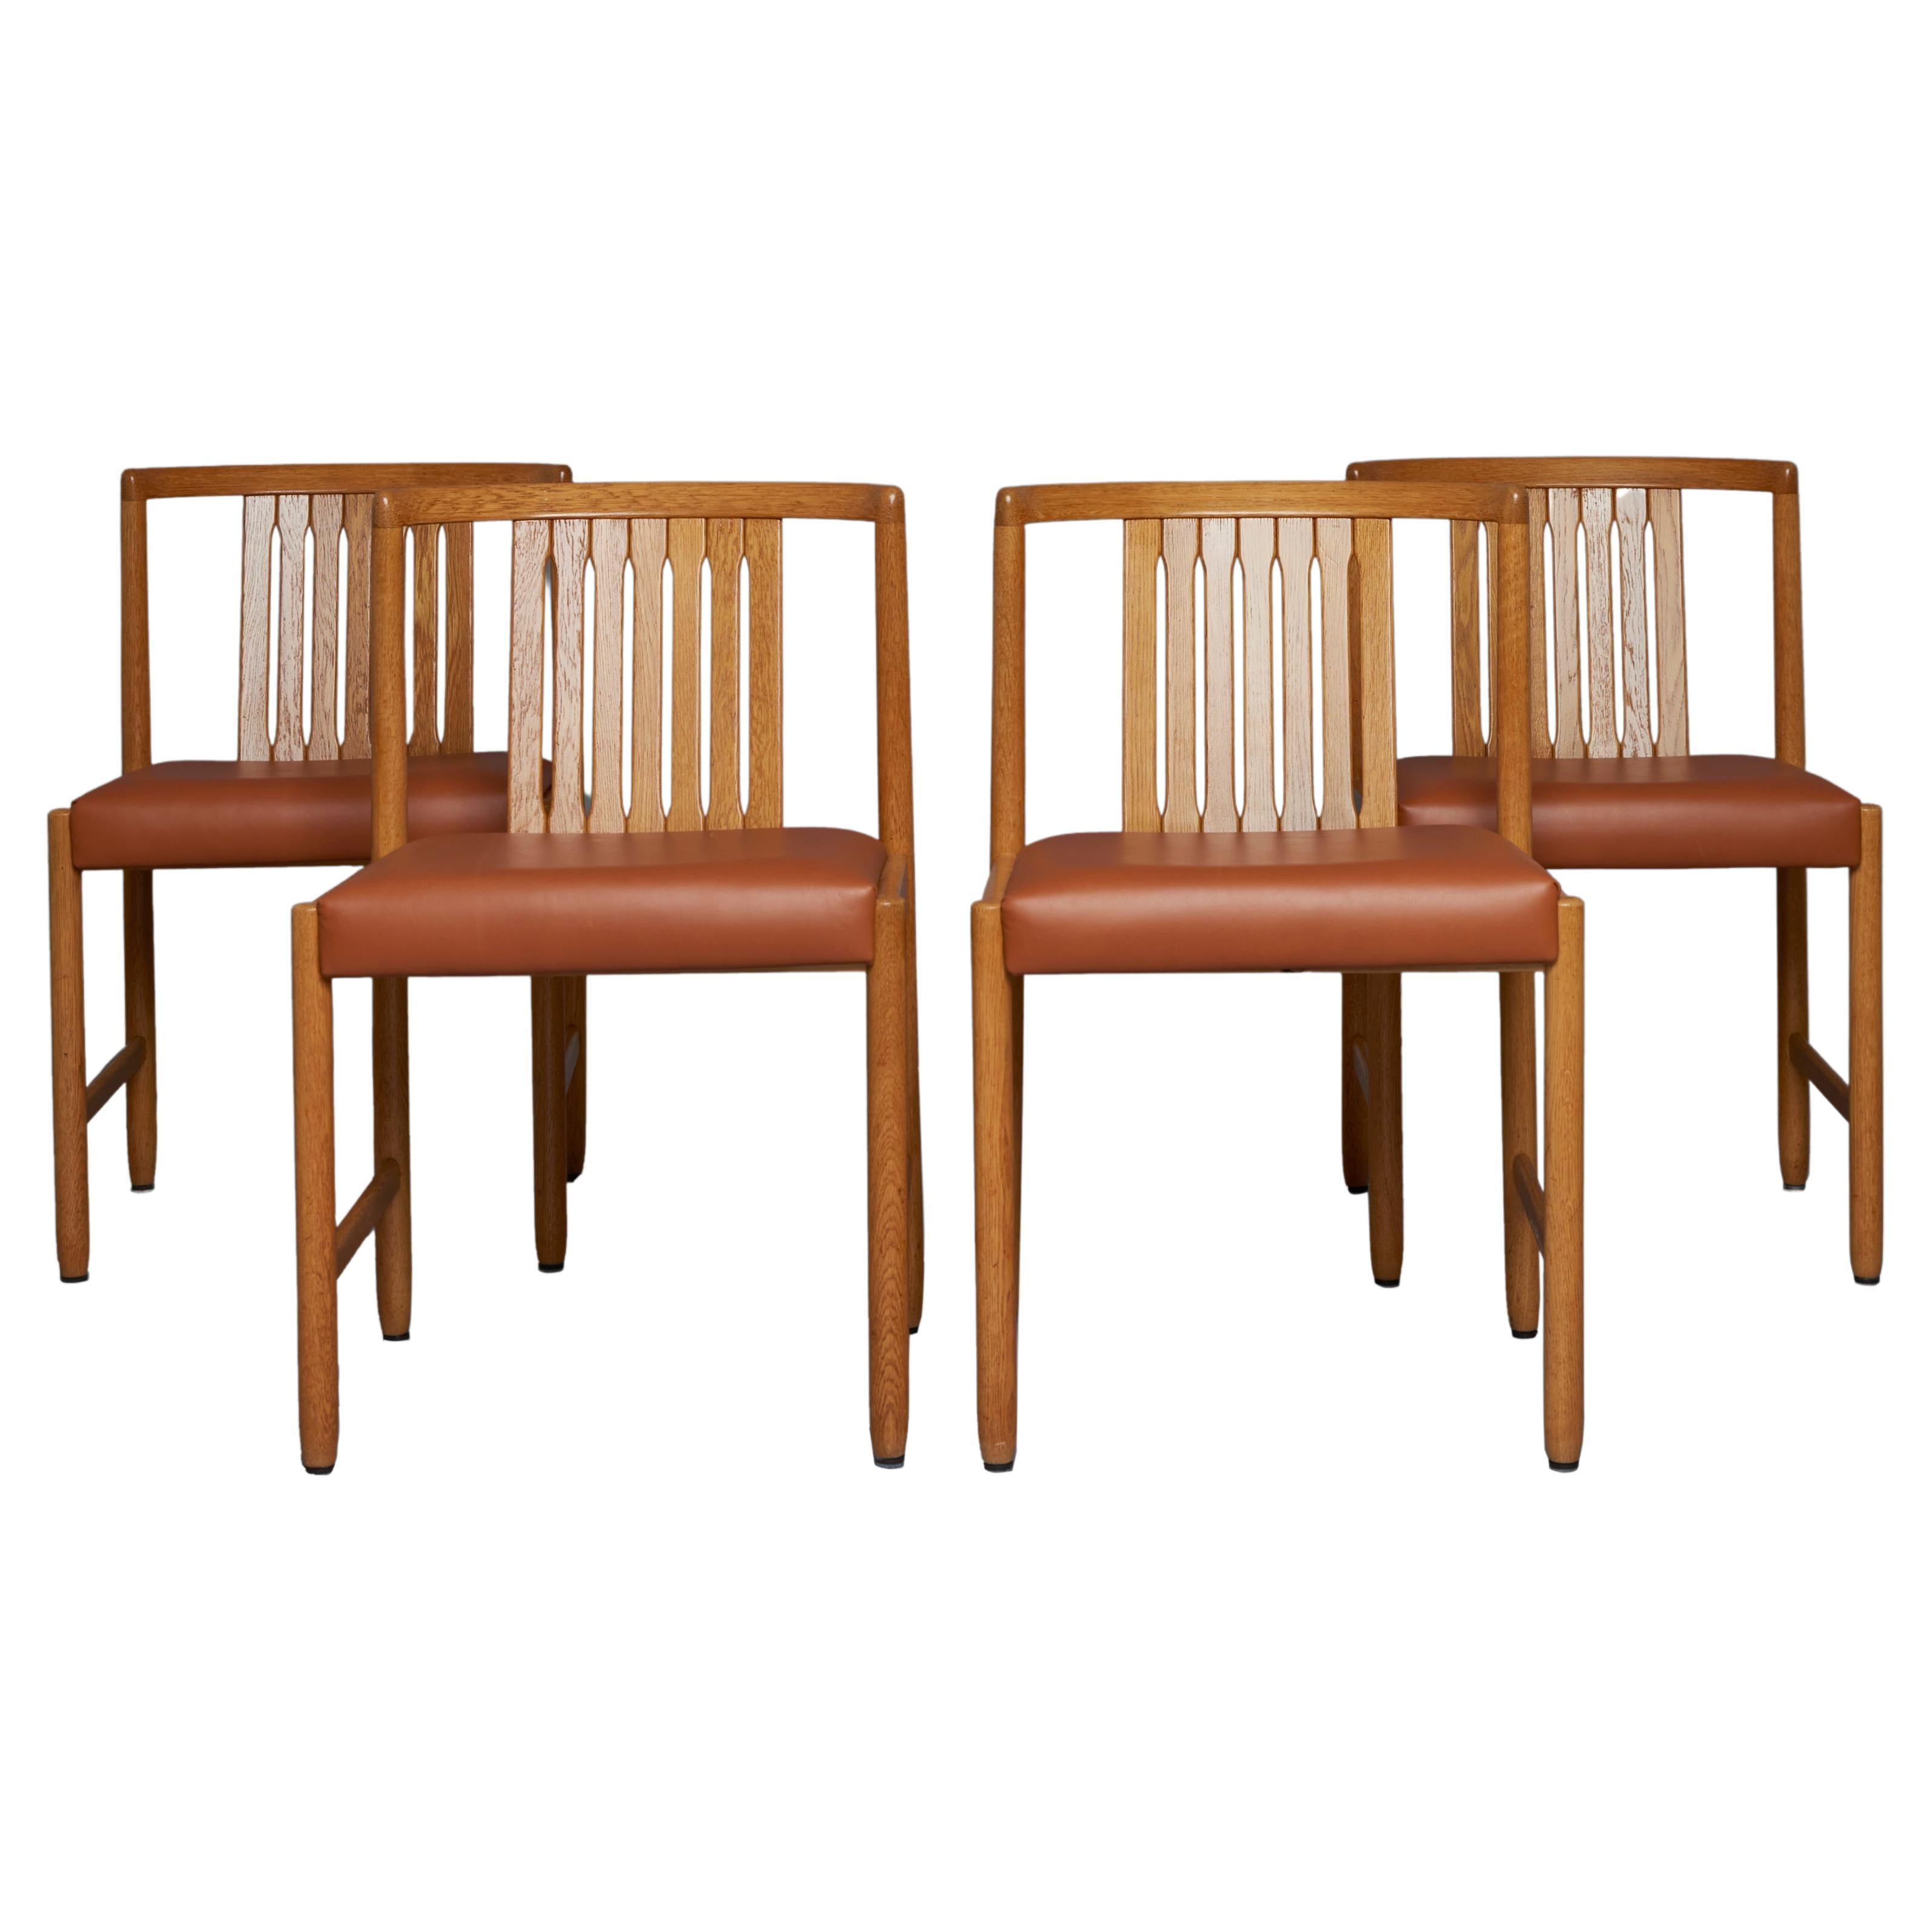 6 Mid-Century Modern Bertil Fridhagen Dining Room Chairs, Bodafors